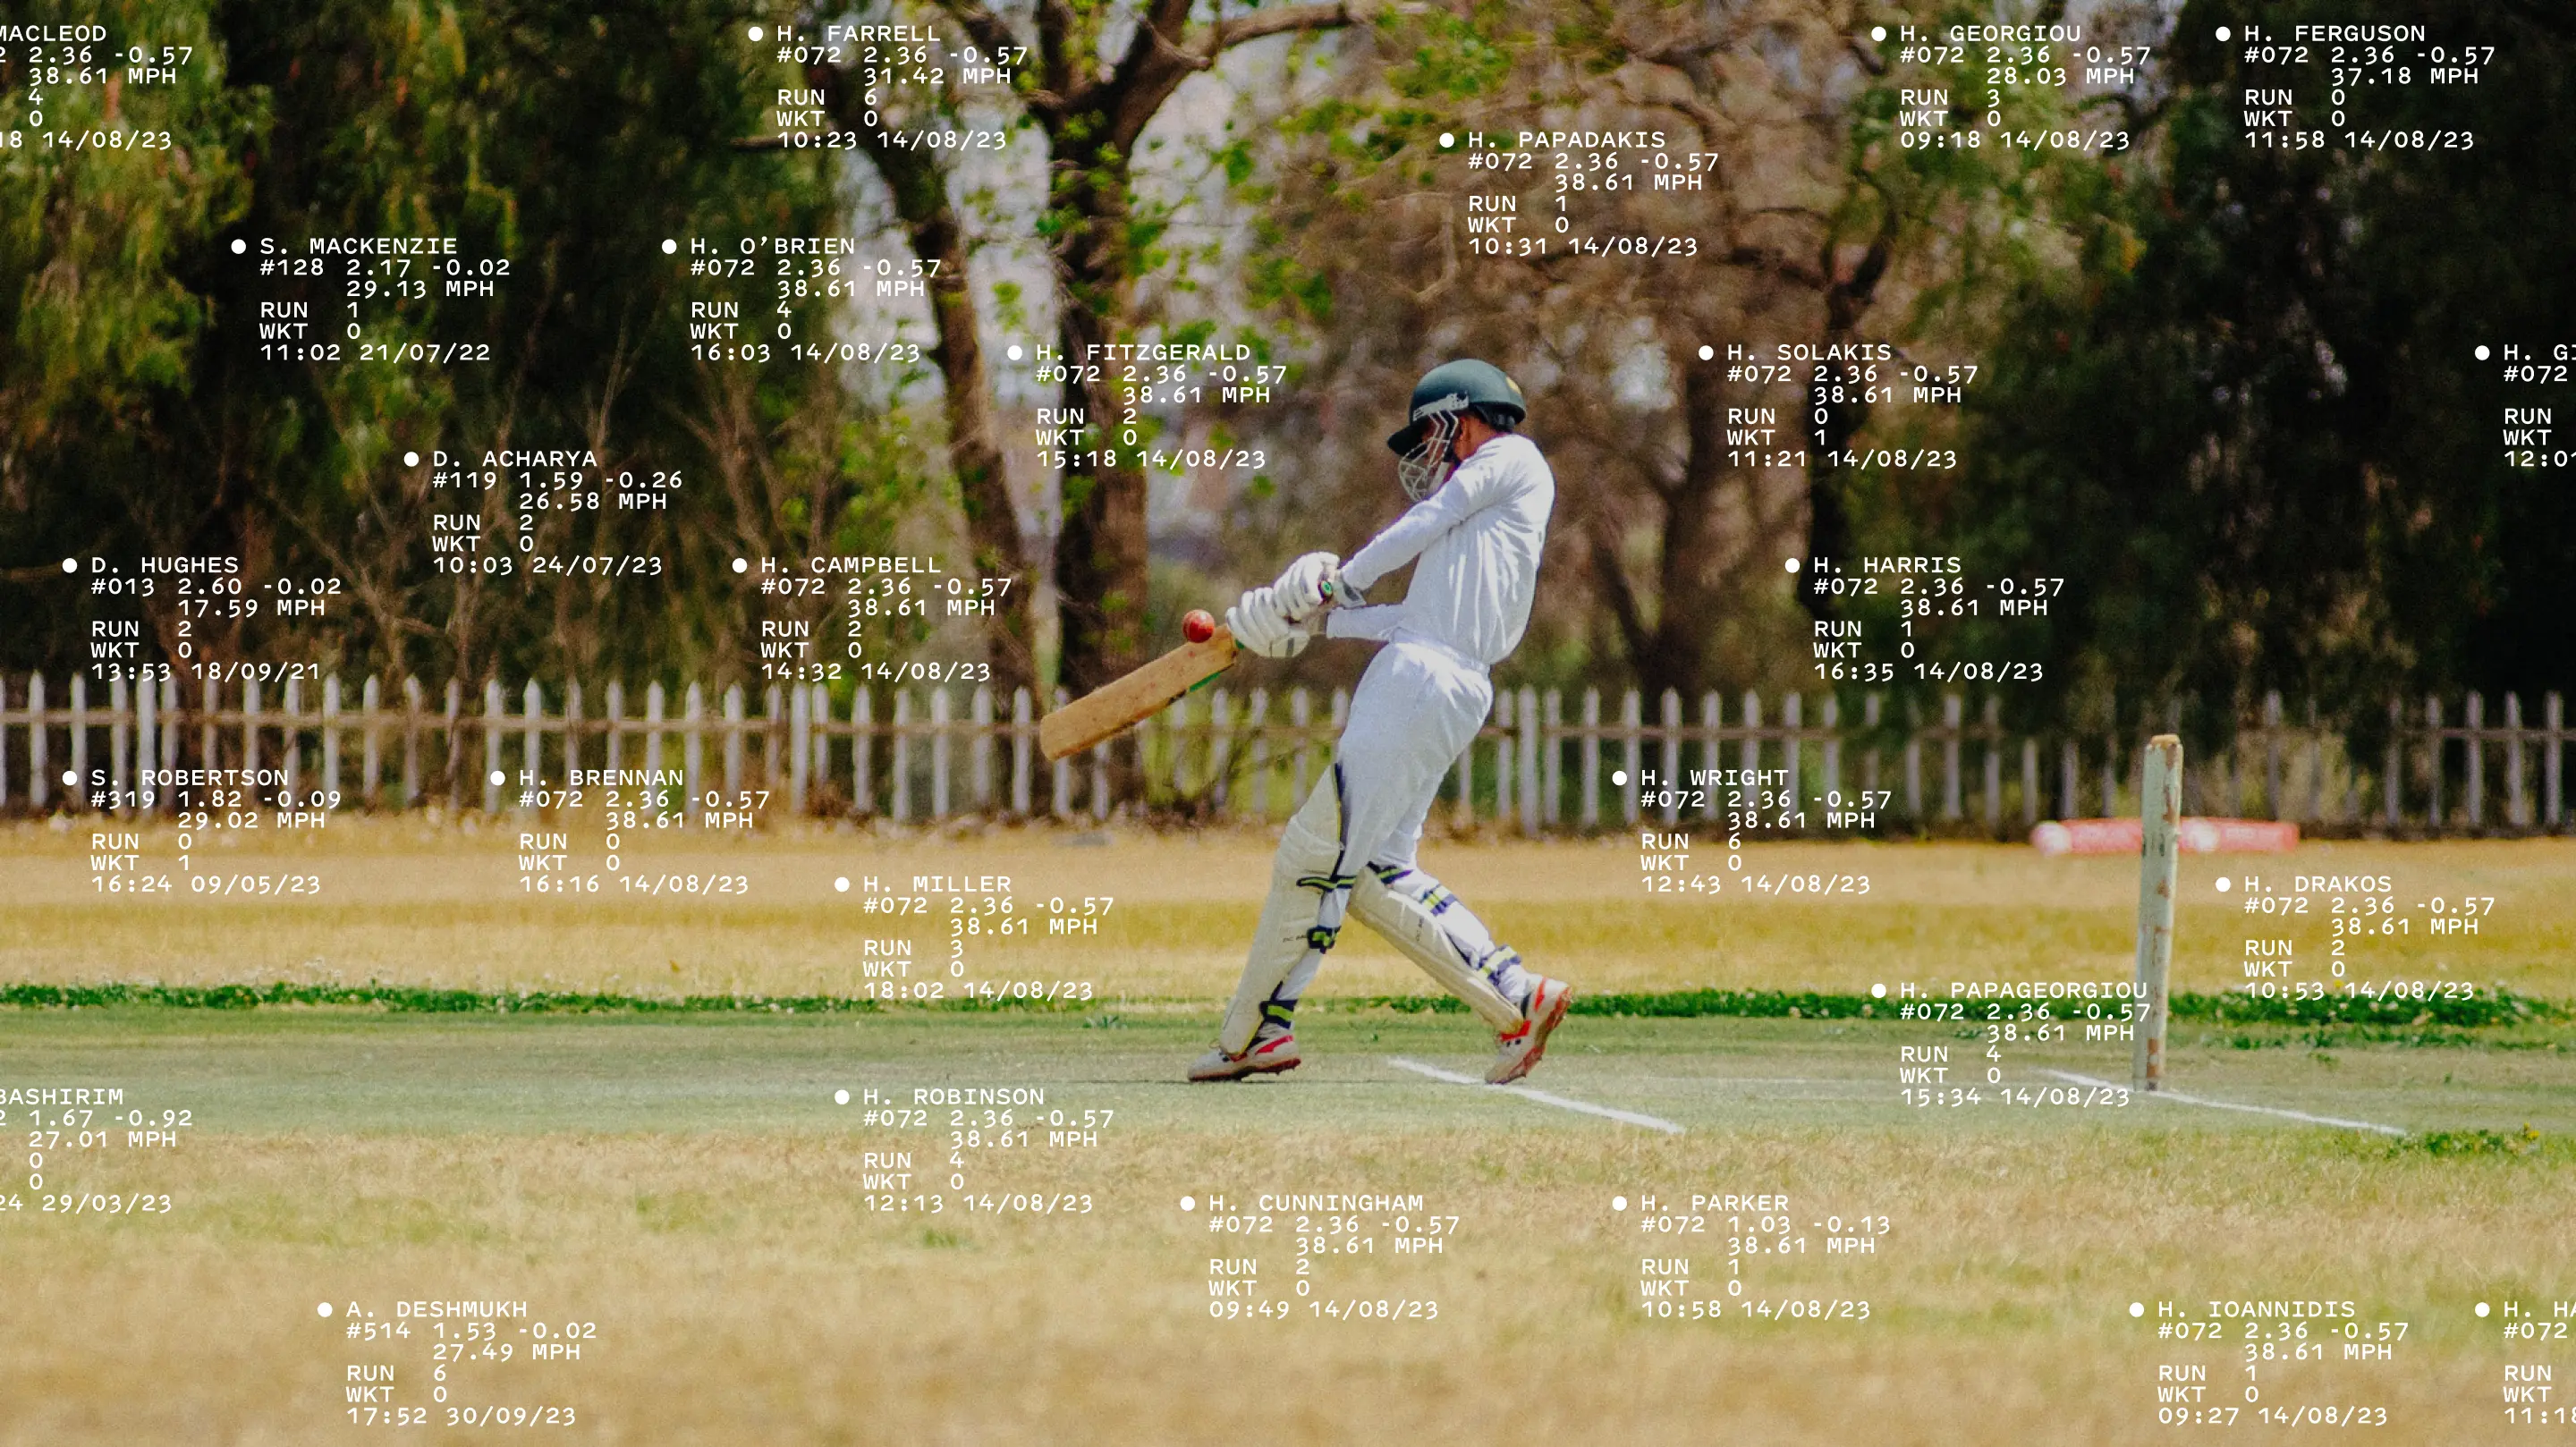 Cricket shots with statistics overlayed